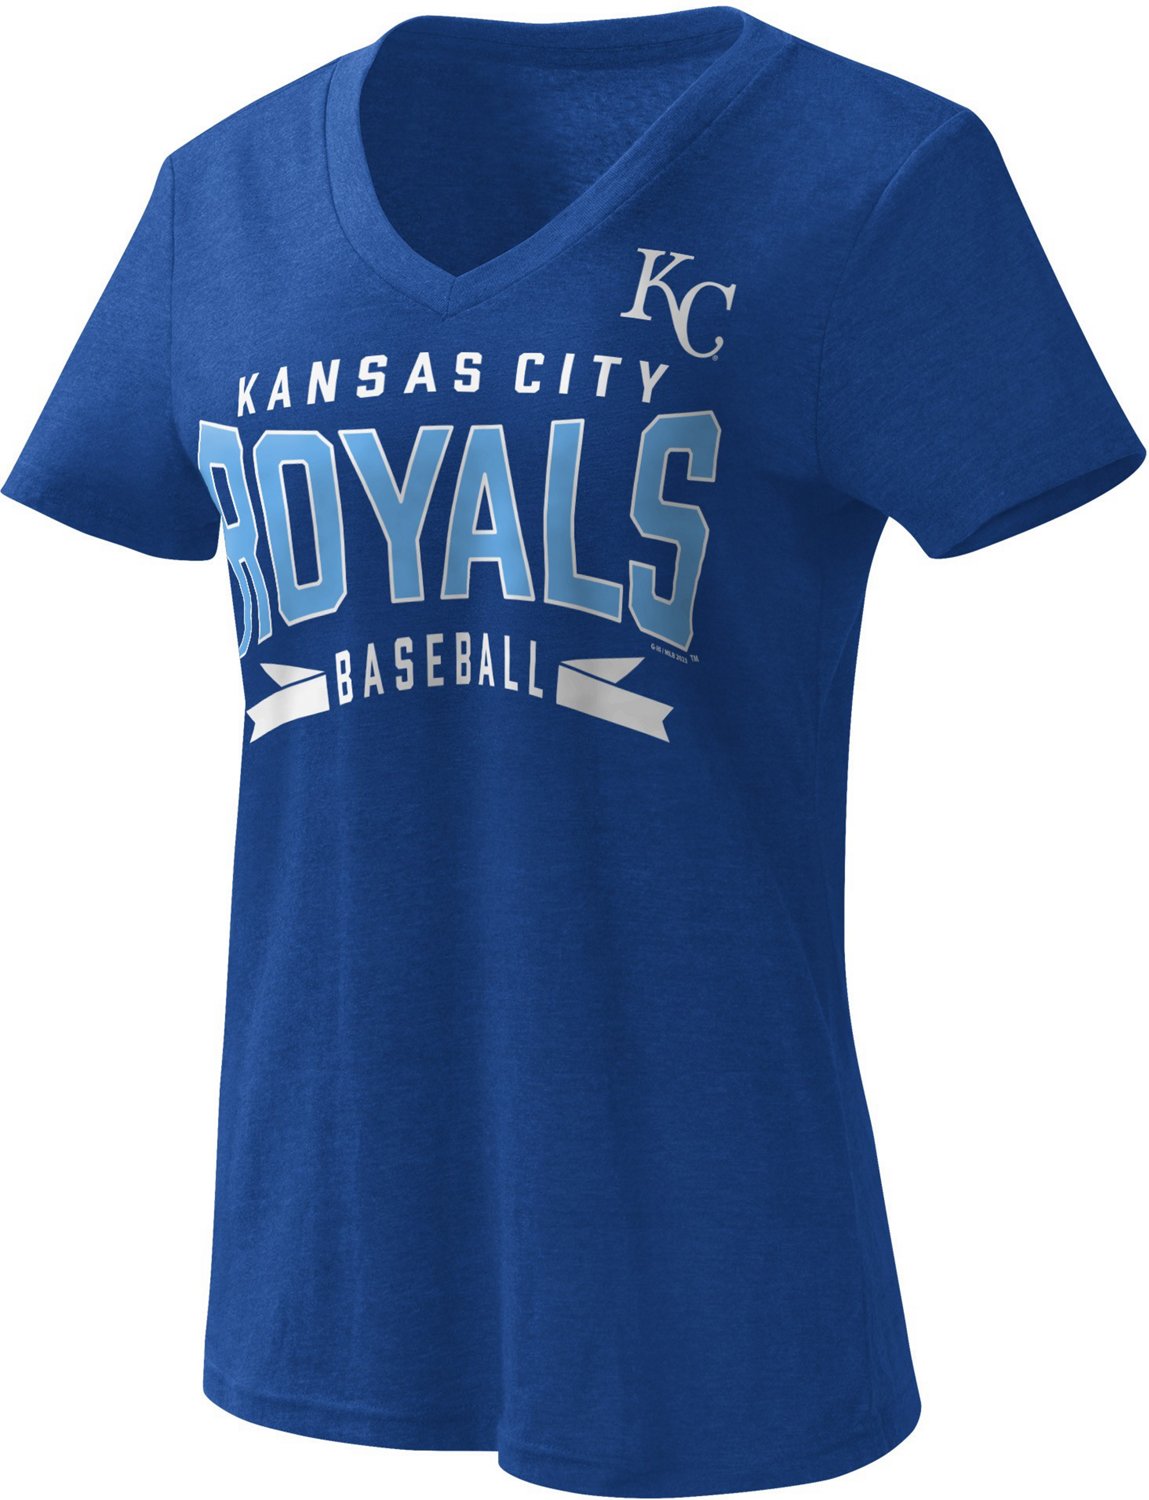 Kansas City Royals Bleached Tee